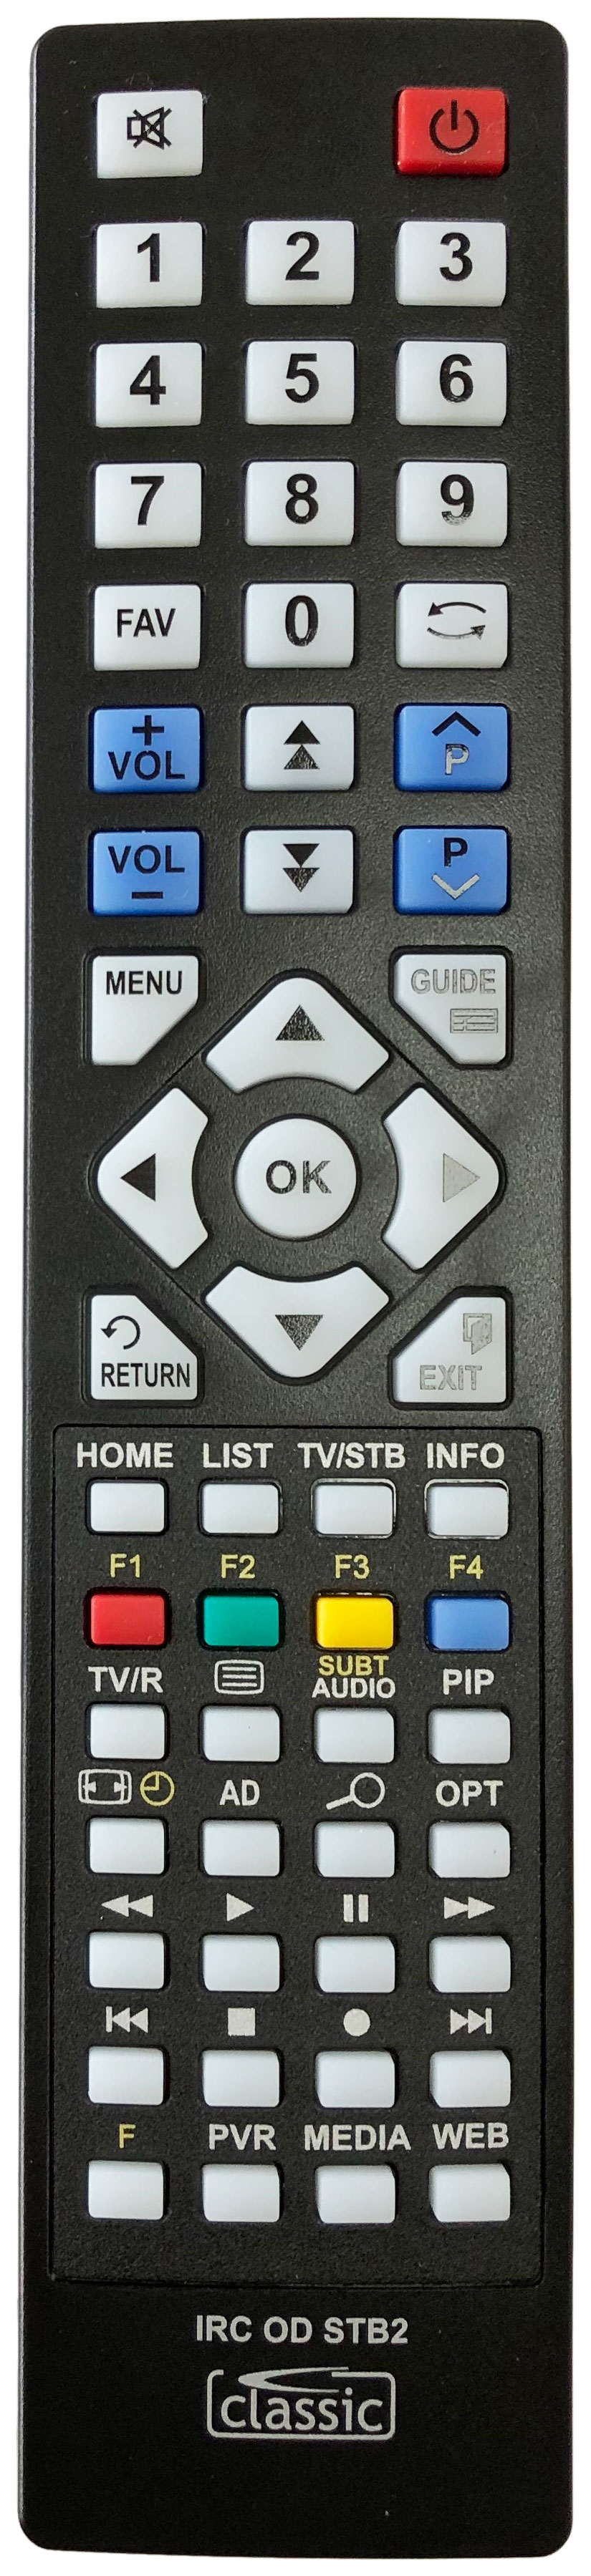 SAGEM DS186HD Remote Control